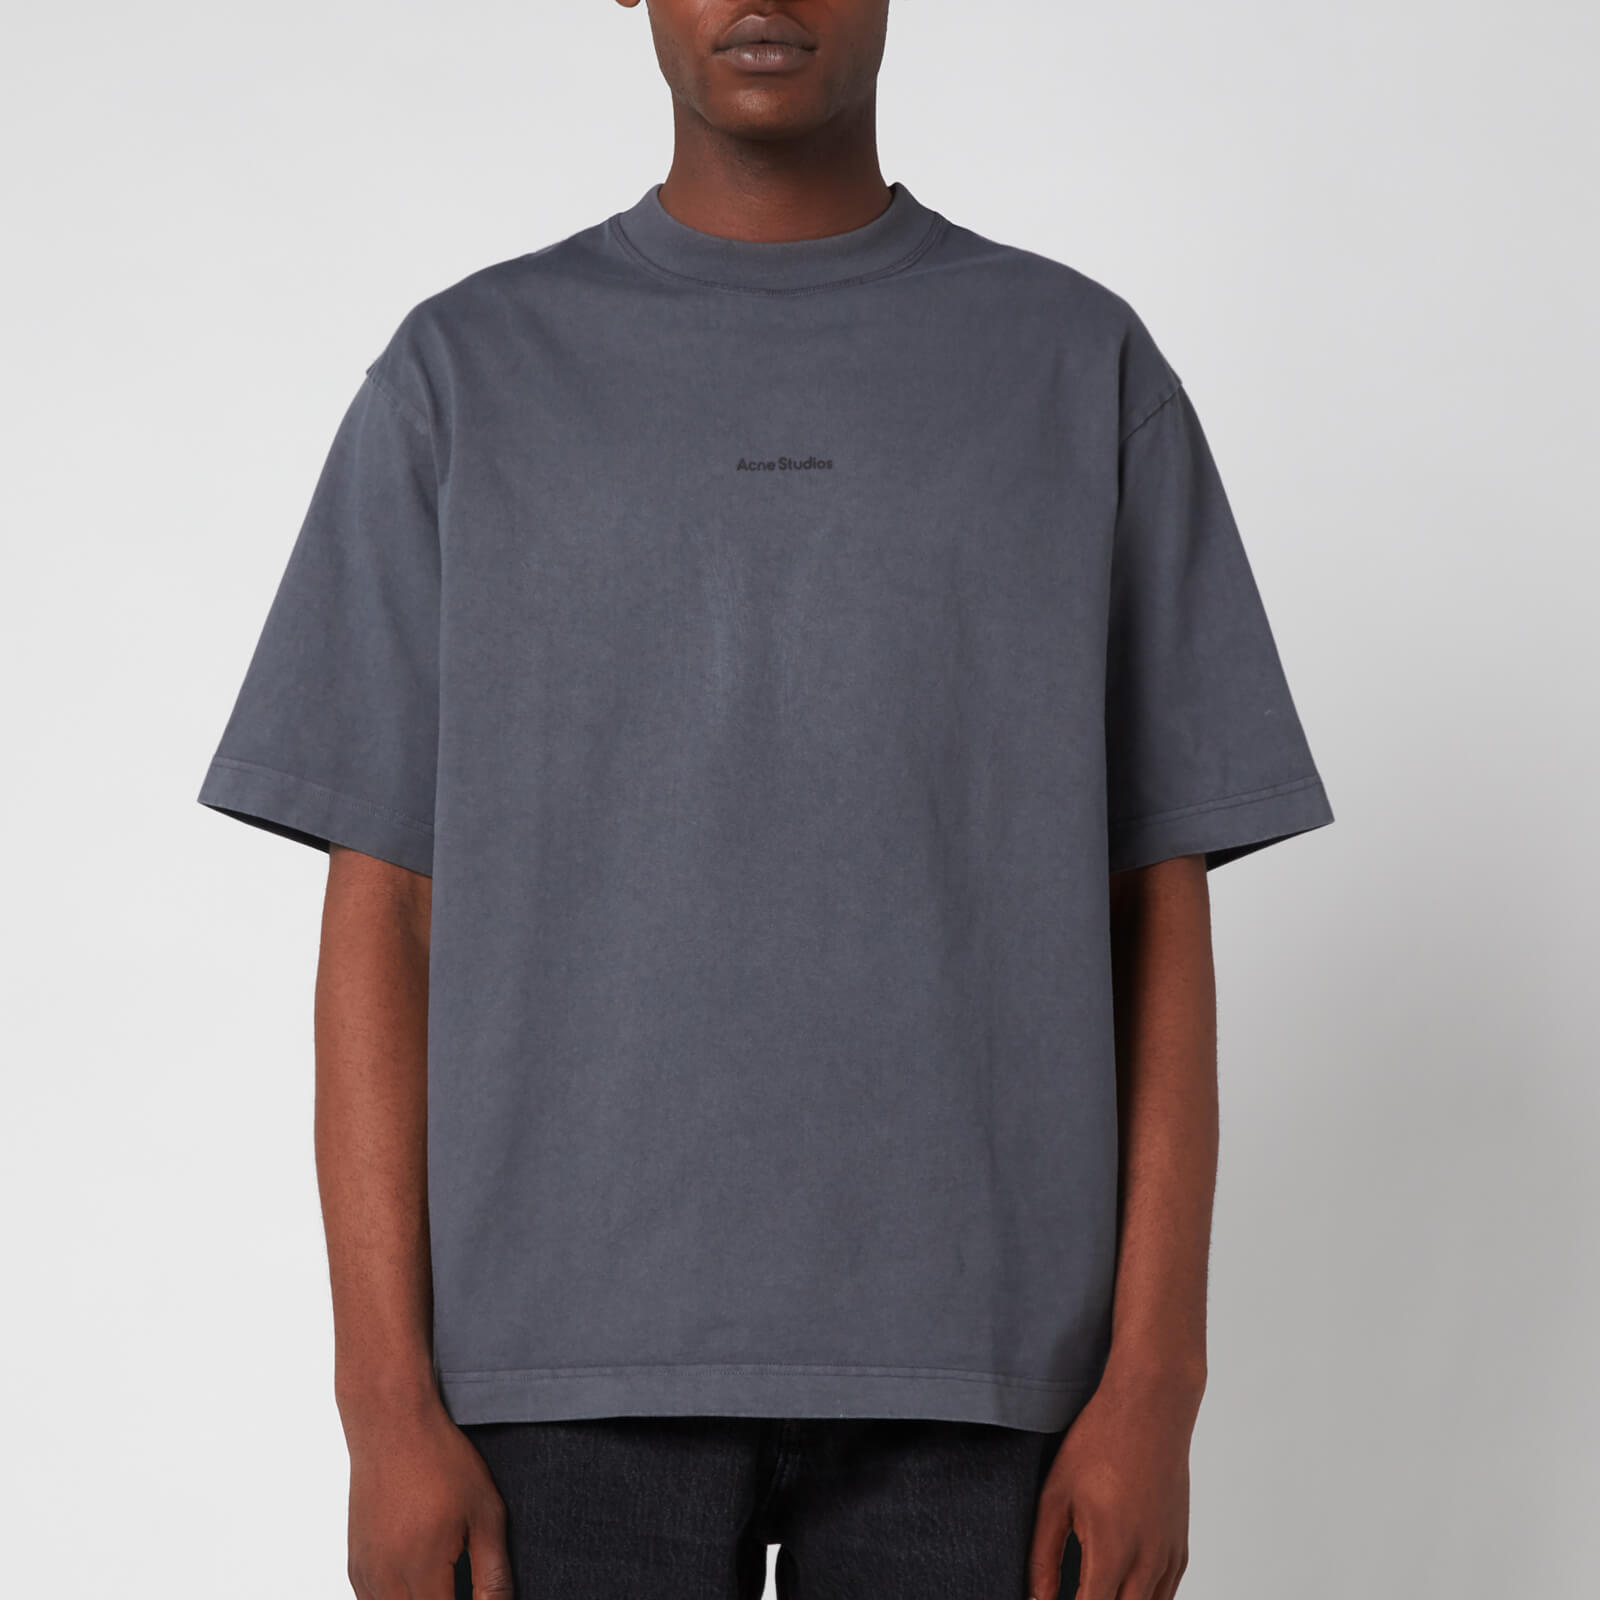 Acne Studios Men's Printed Logo T-Shirt - Slate Grey - S